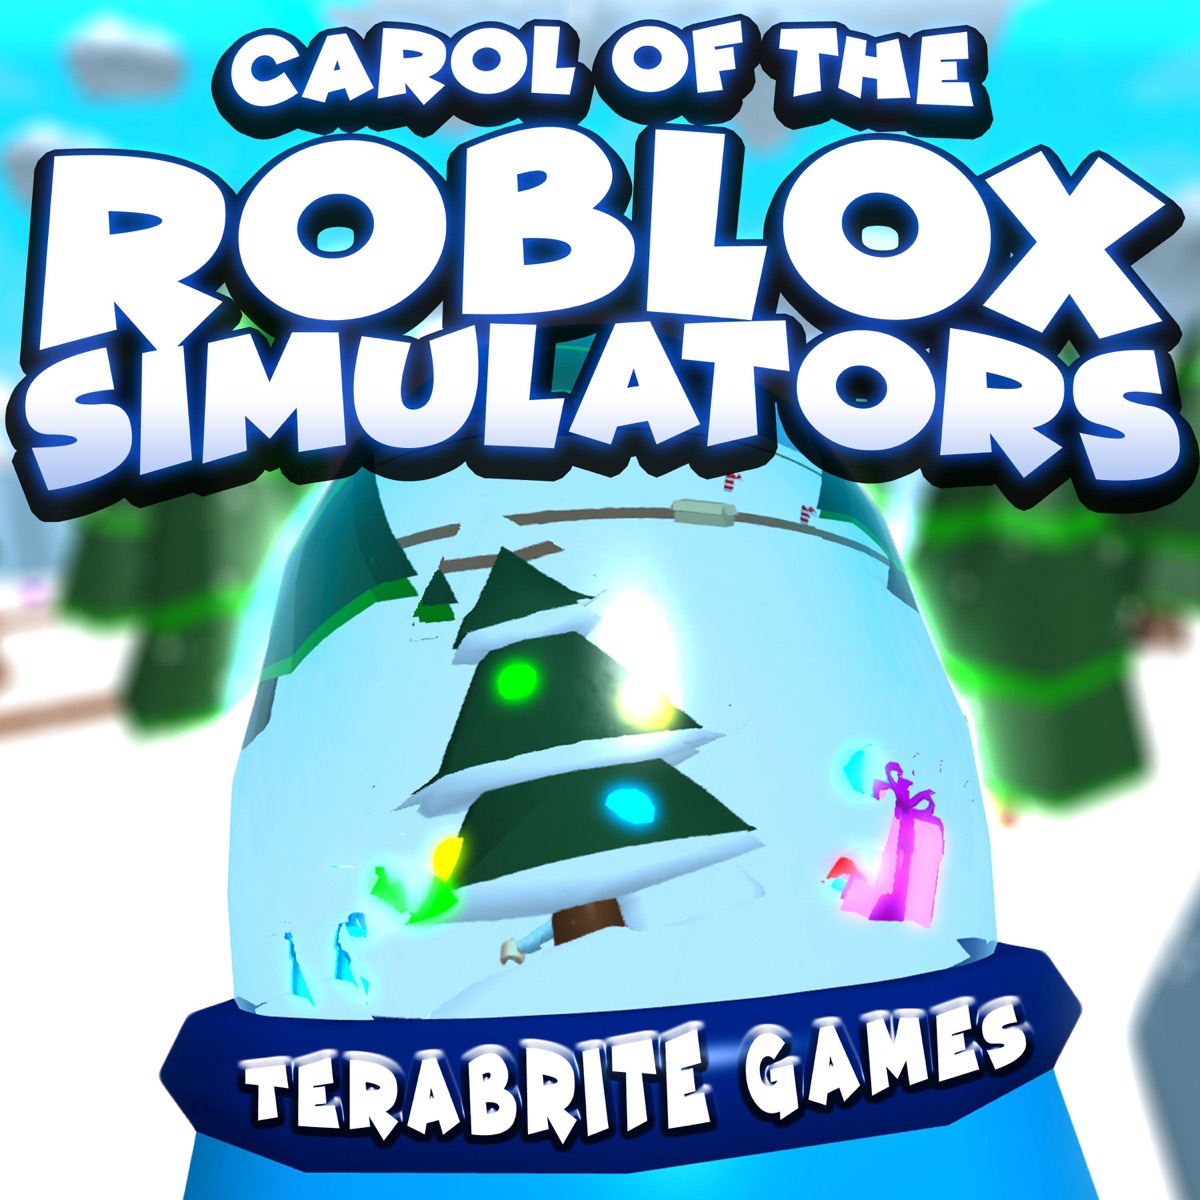 Carol Of The Roblox Simulators Terabrite Games Lyrics Ratings And Reviews - smooth jazz roblox id